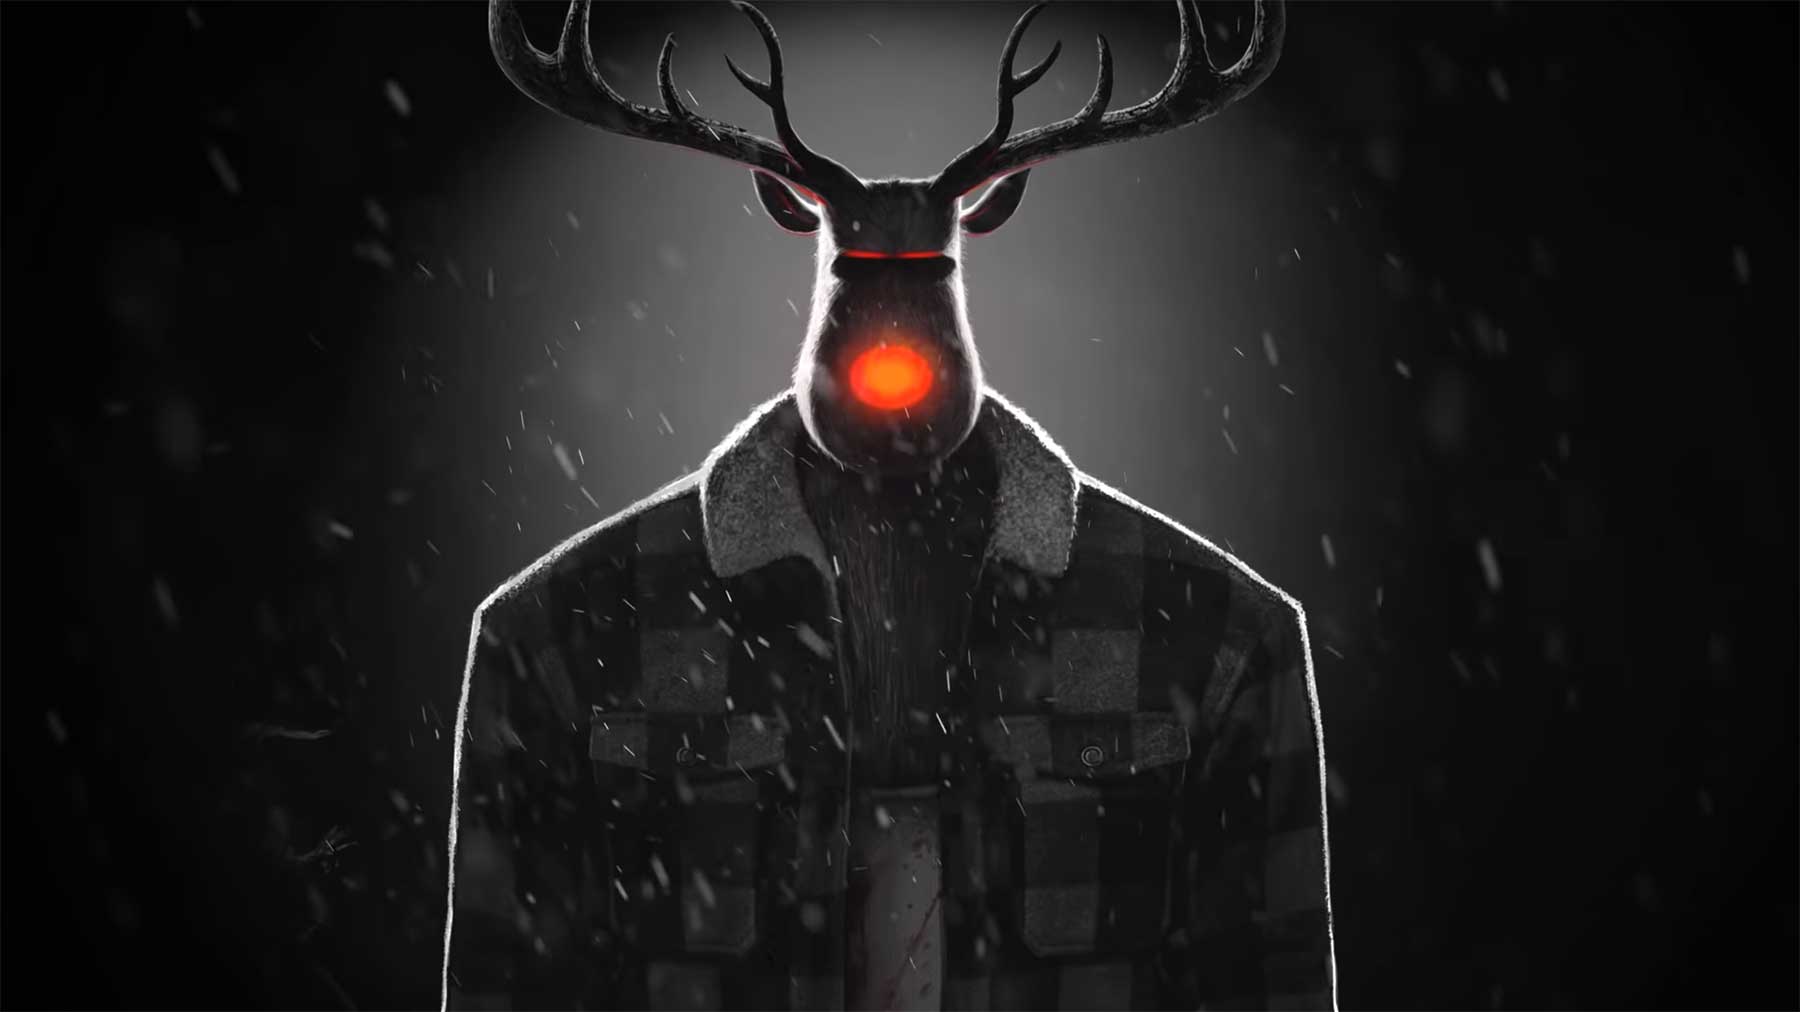 Weihnachts-Horror von Steve Cutts: "Fear Of The Deer" Fear-Of-The-Deer_short 